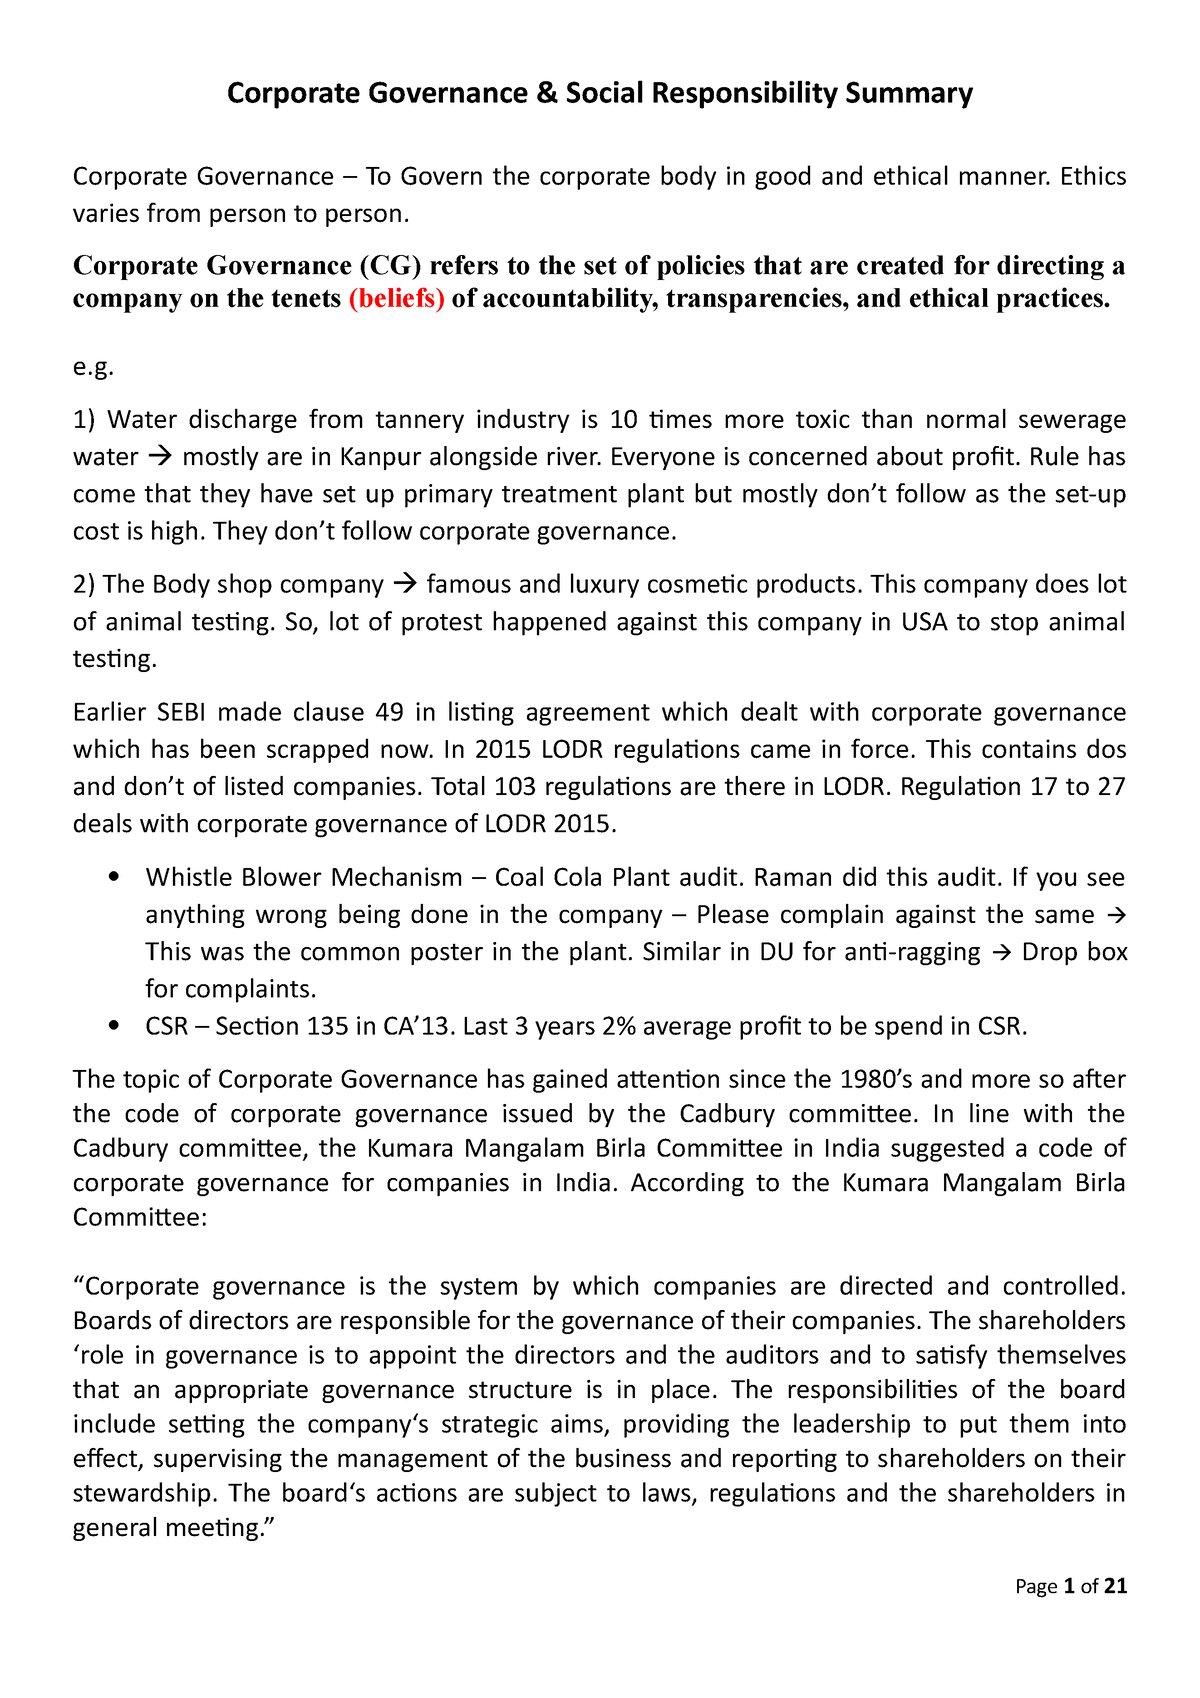 cadbury committee report on corporate governance